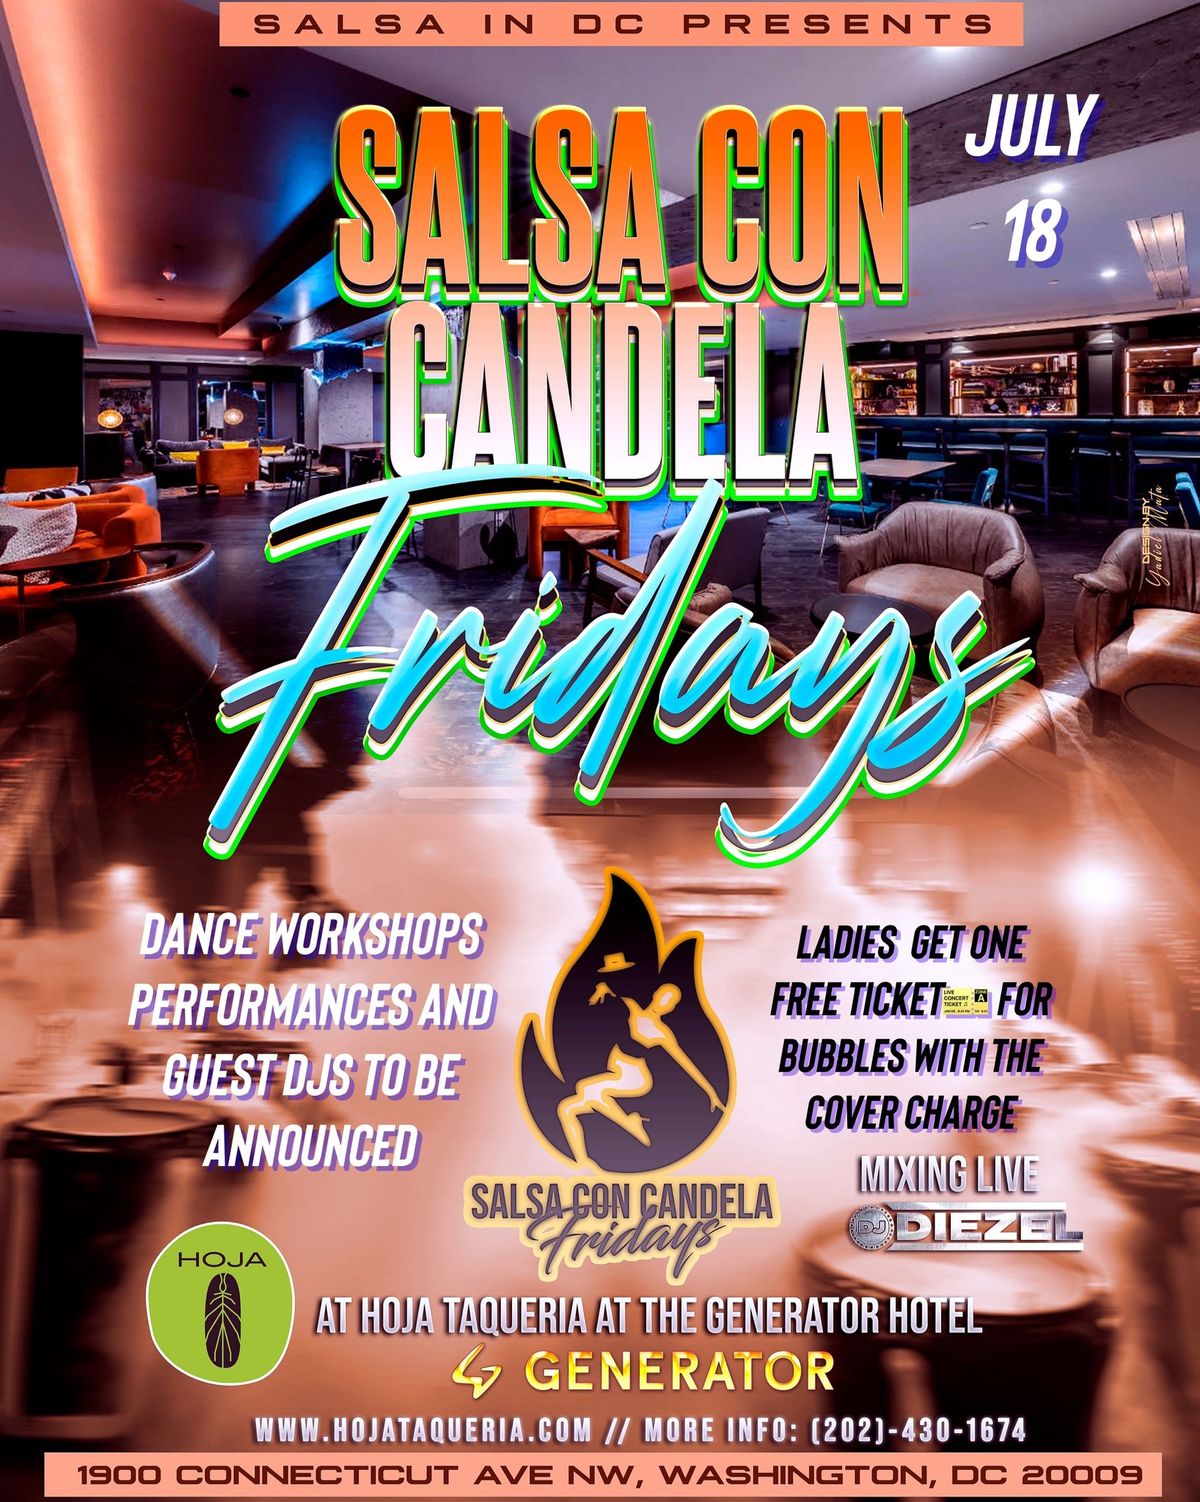 Salsa con candela Fridays 1 year anniversary! At hoja taqueria at the generator hotel!